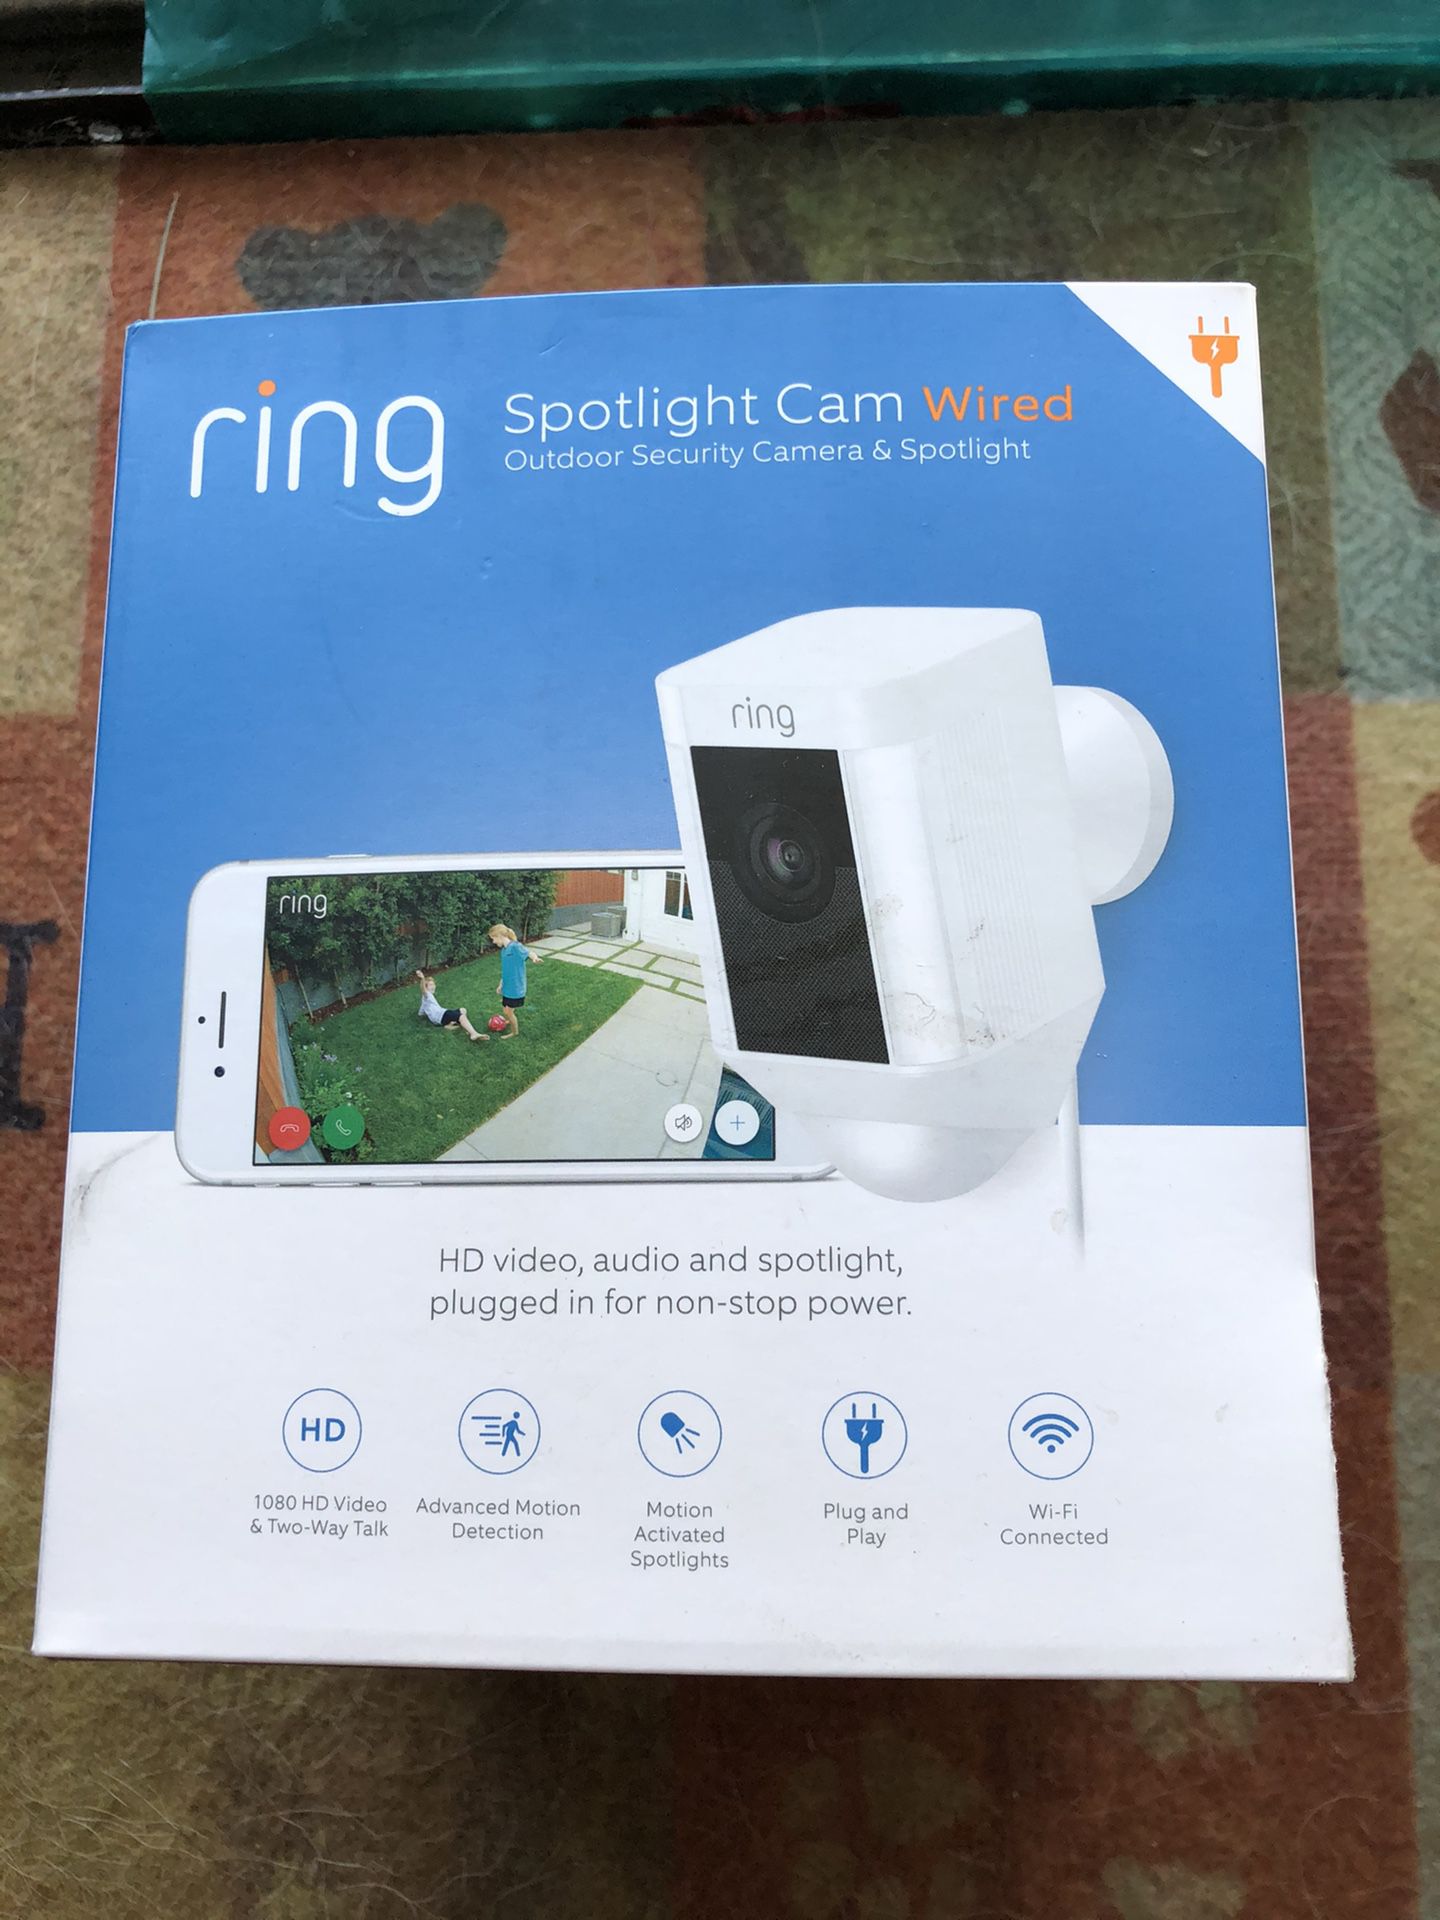 Ring Spotlight Cam Wired - White